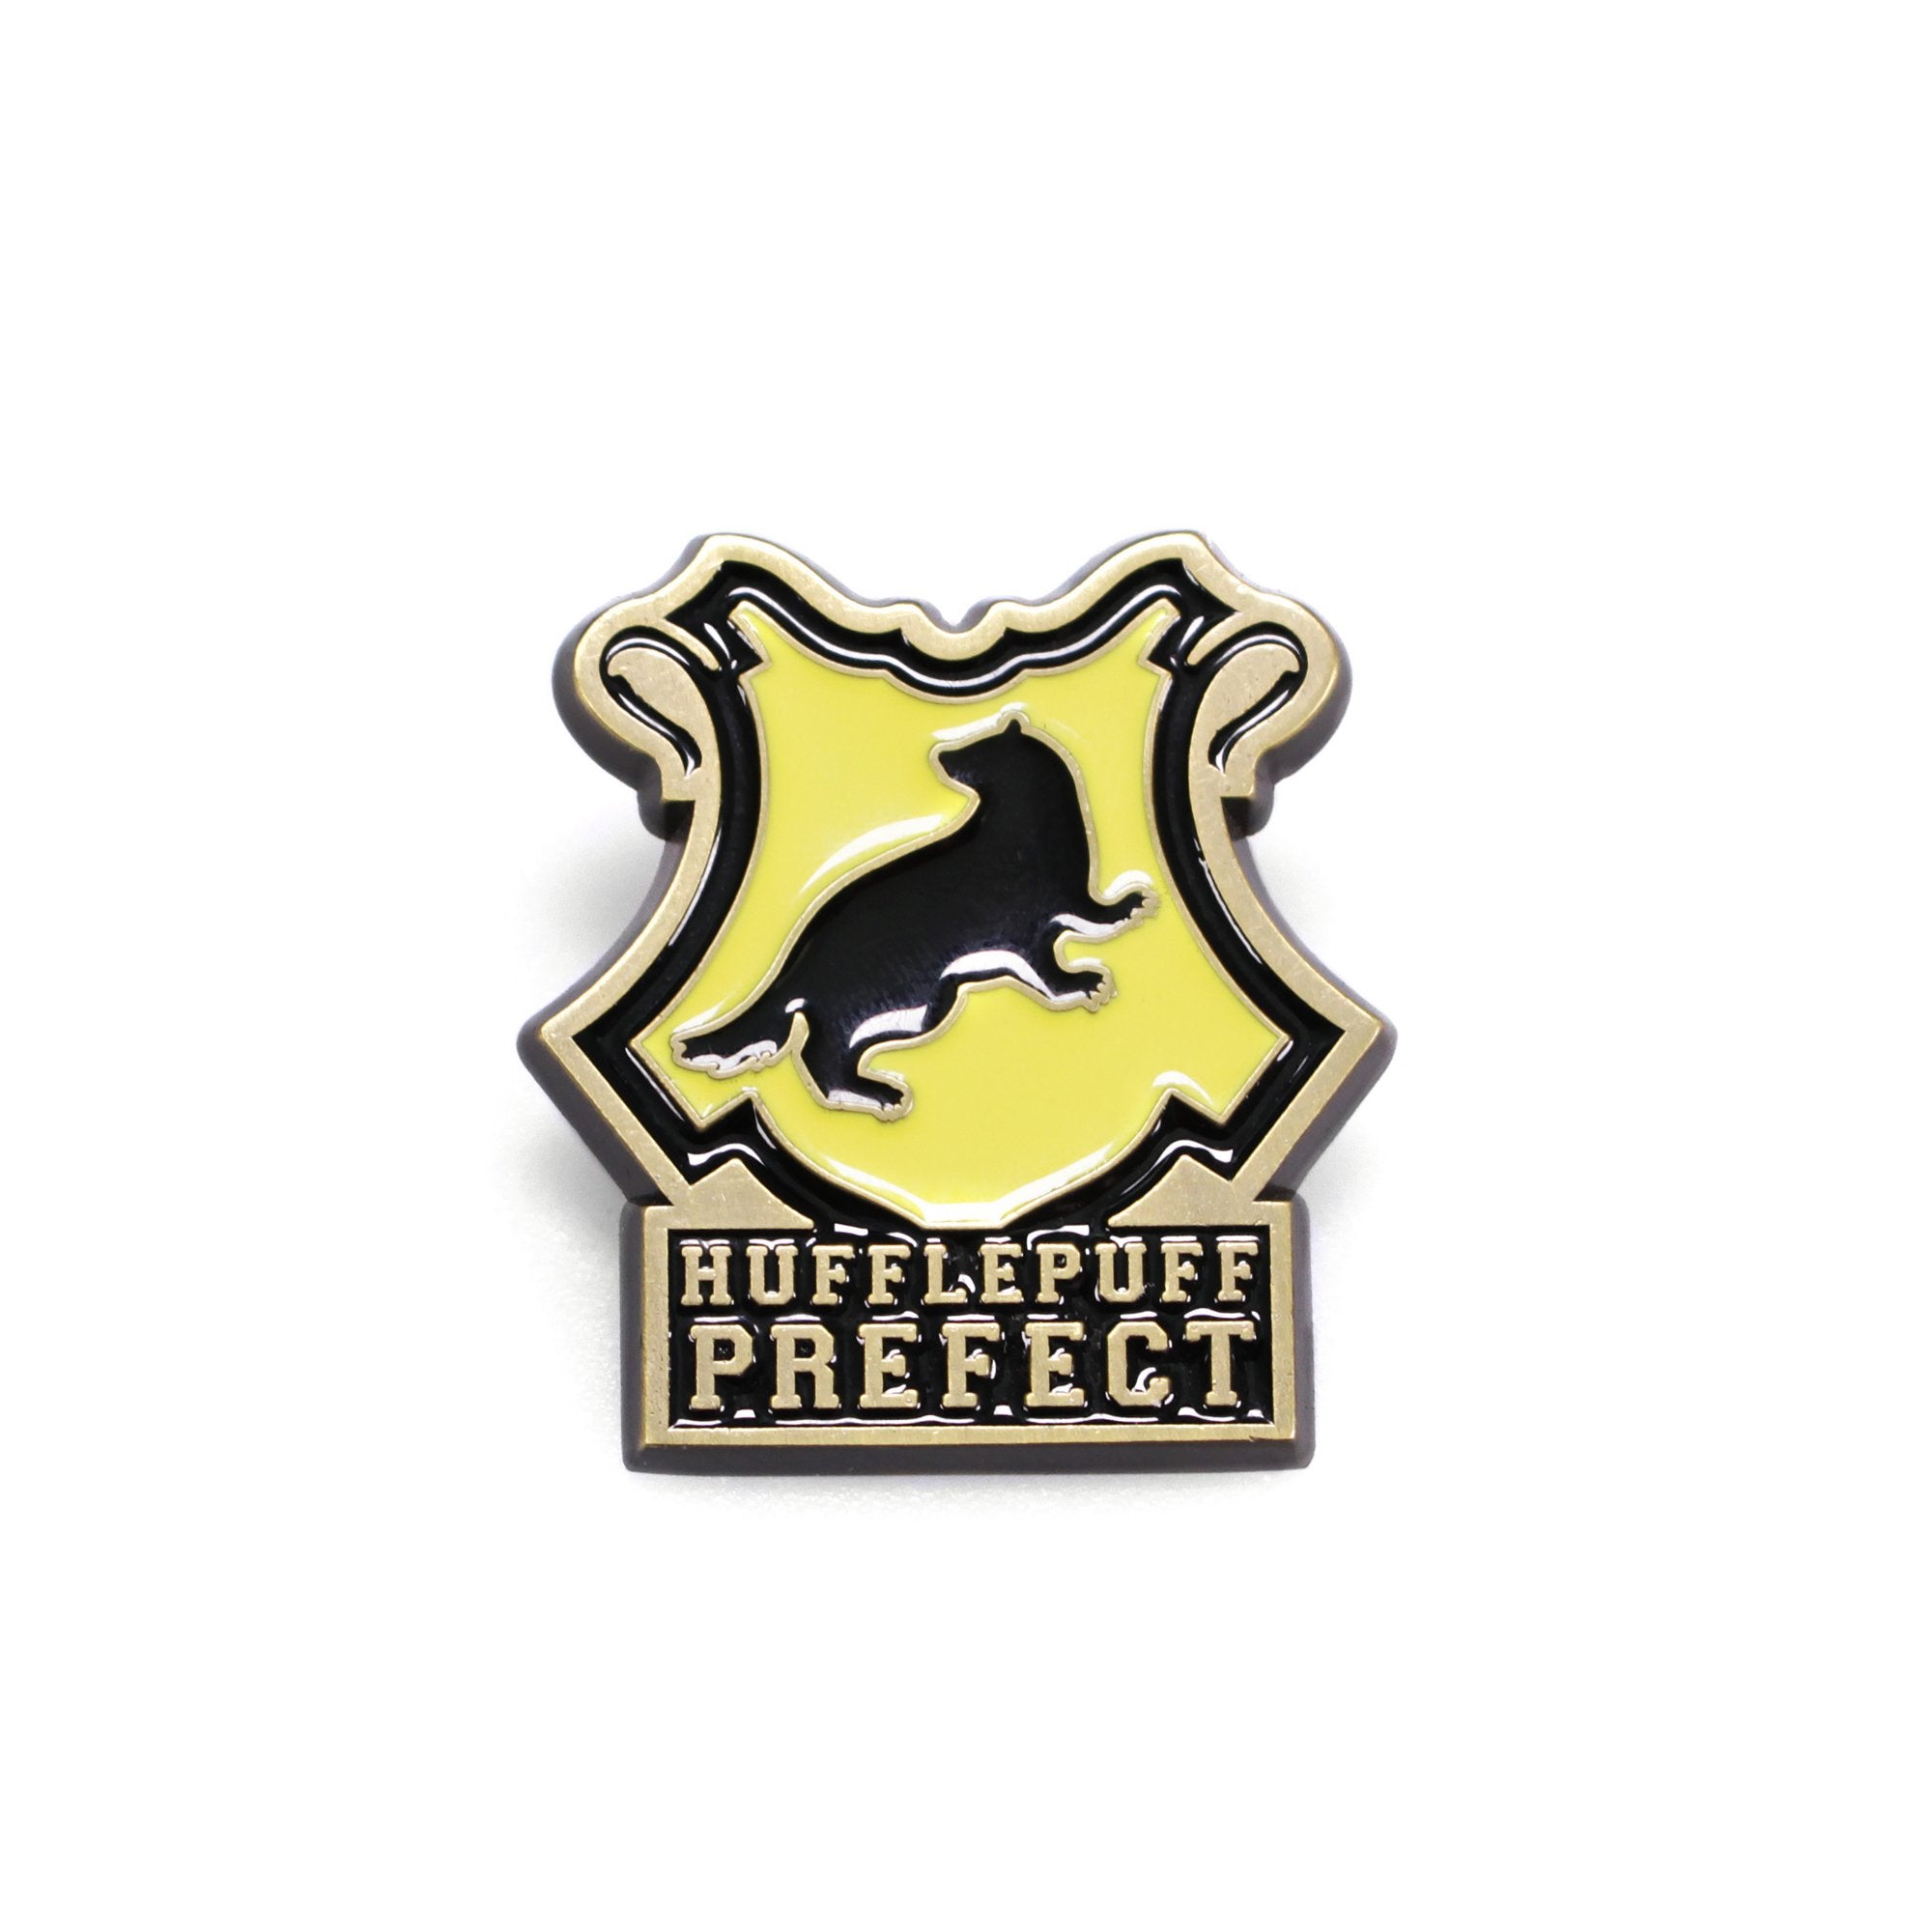 Harry Potter Pin Badge - Hufflepuff Prefect